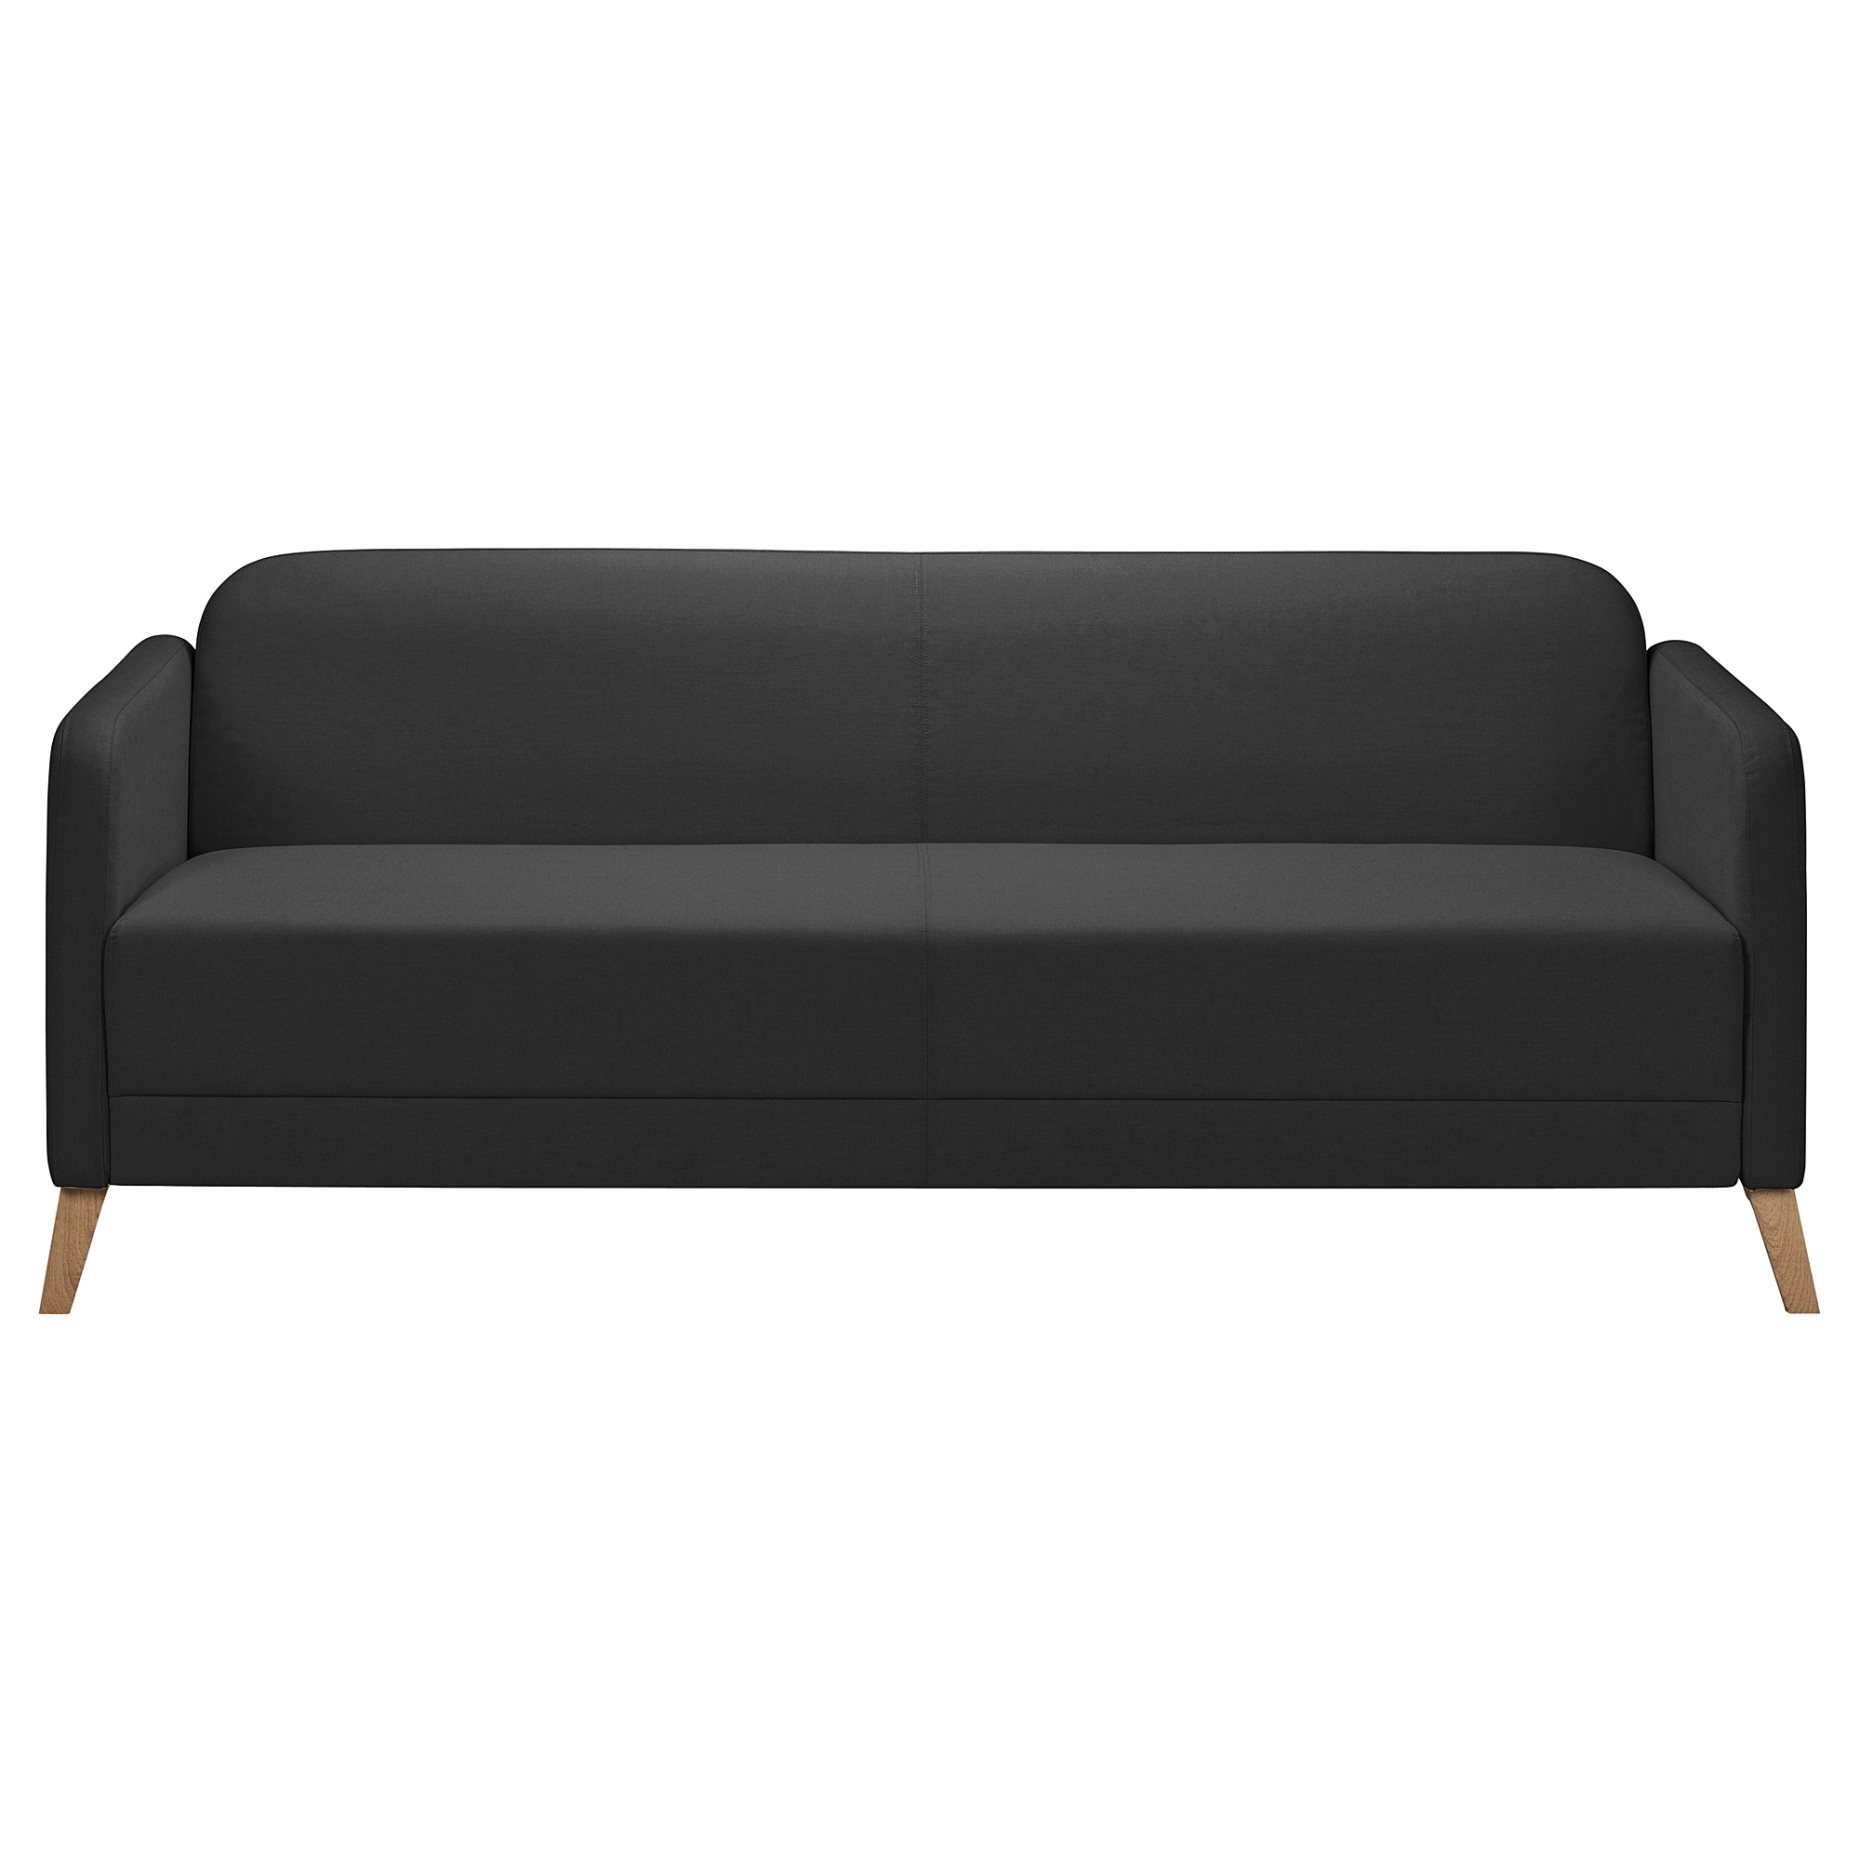 LINANÄS, τριθέσιος καναπές, 205.122.45